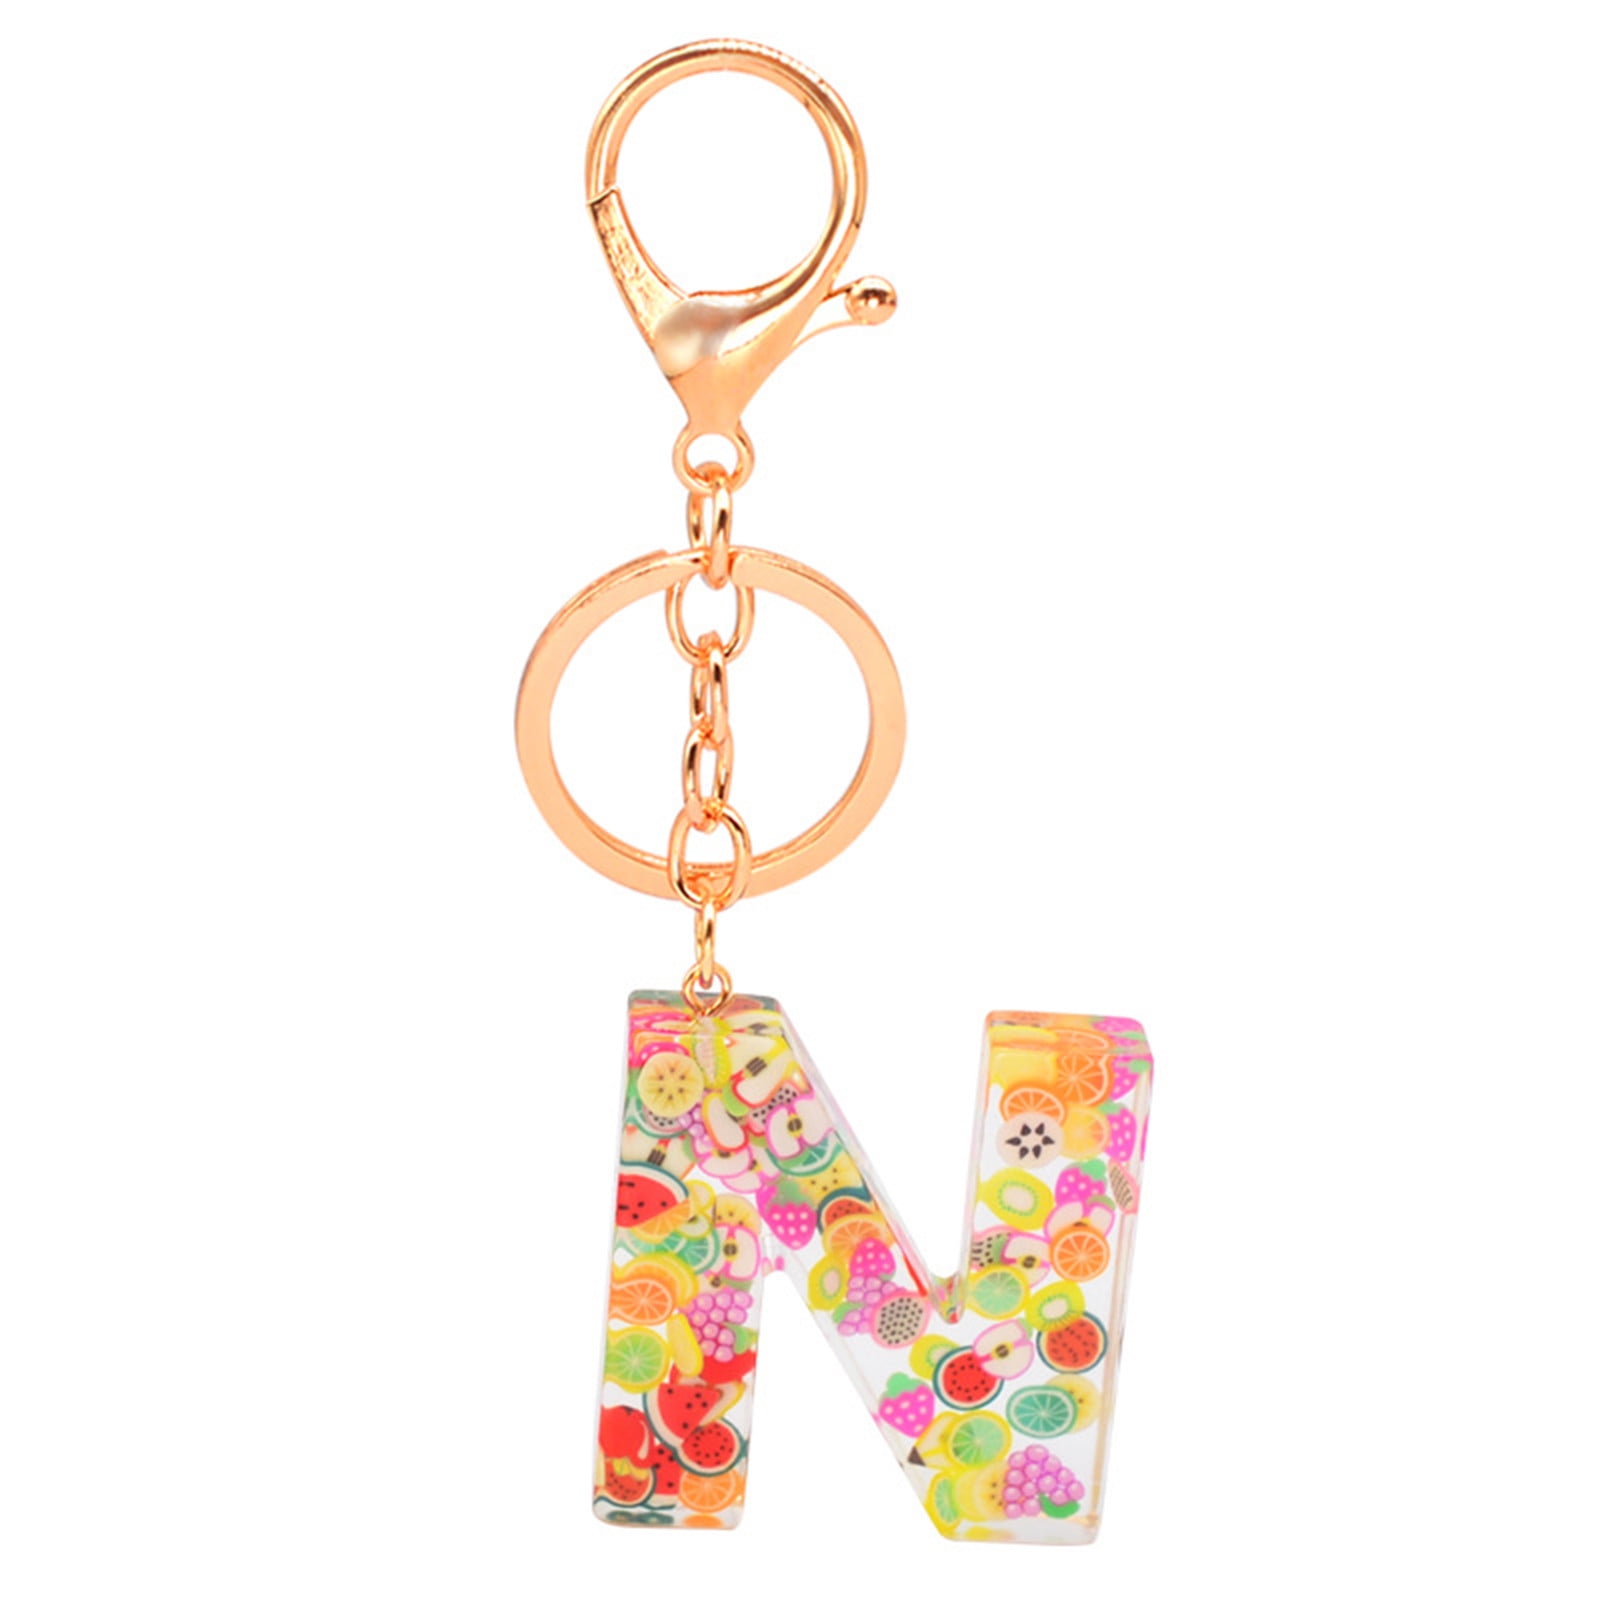 Good Luck Rhinestone Money Bag Keychain For Women And Girls - Cute